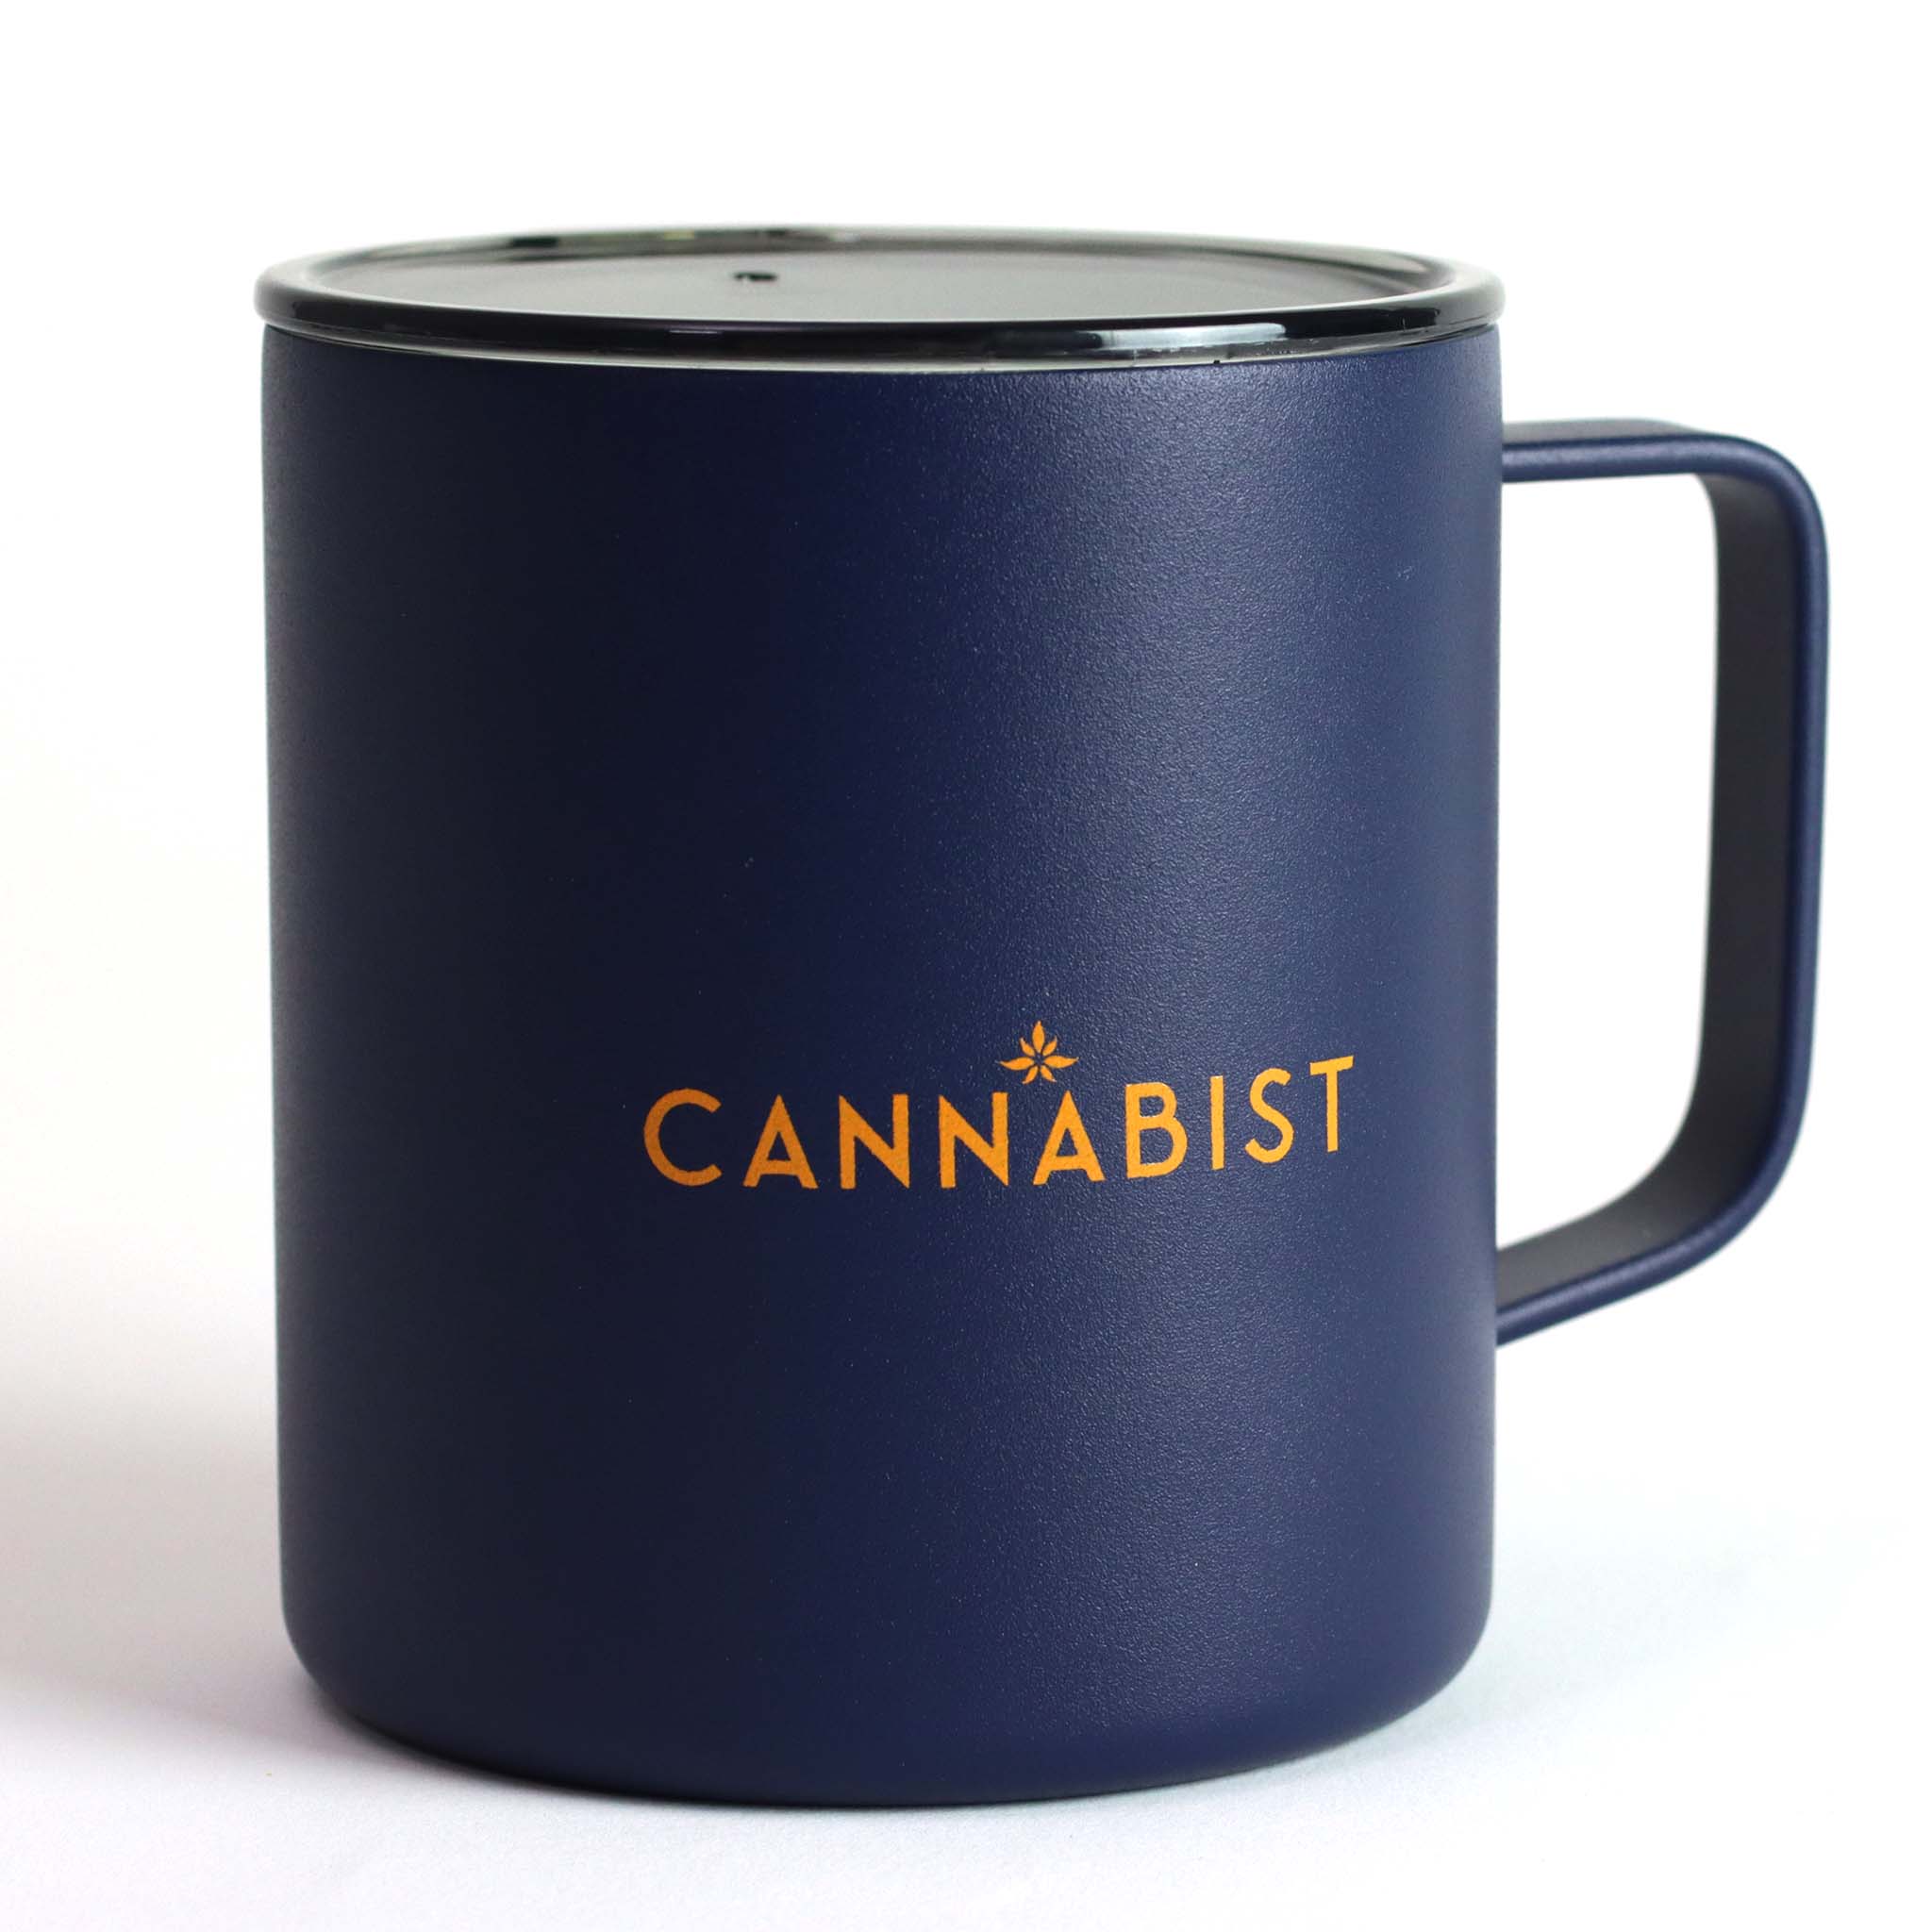 Cannabist Insulated Camp Mug